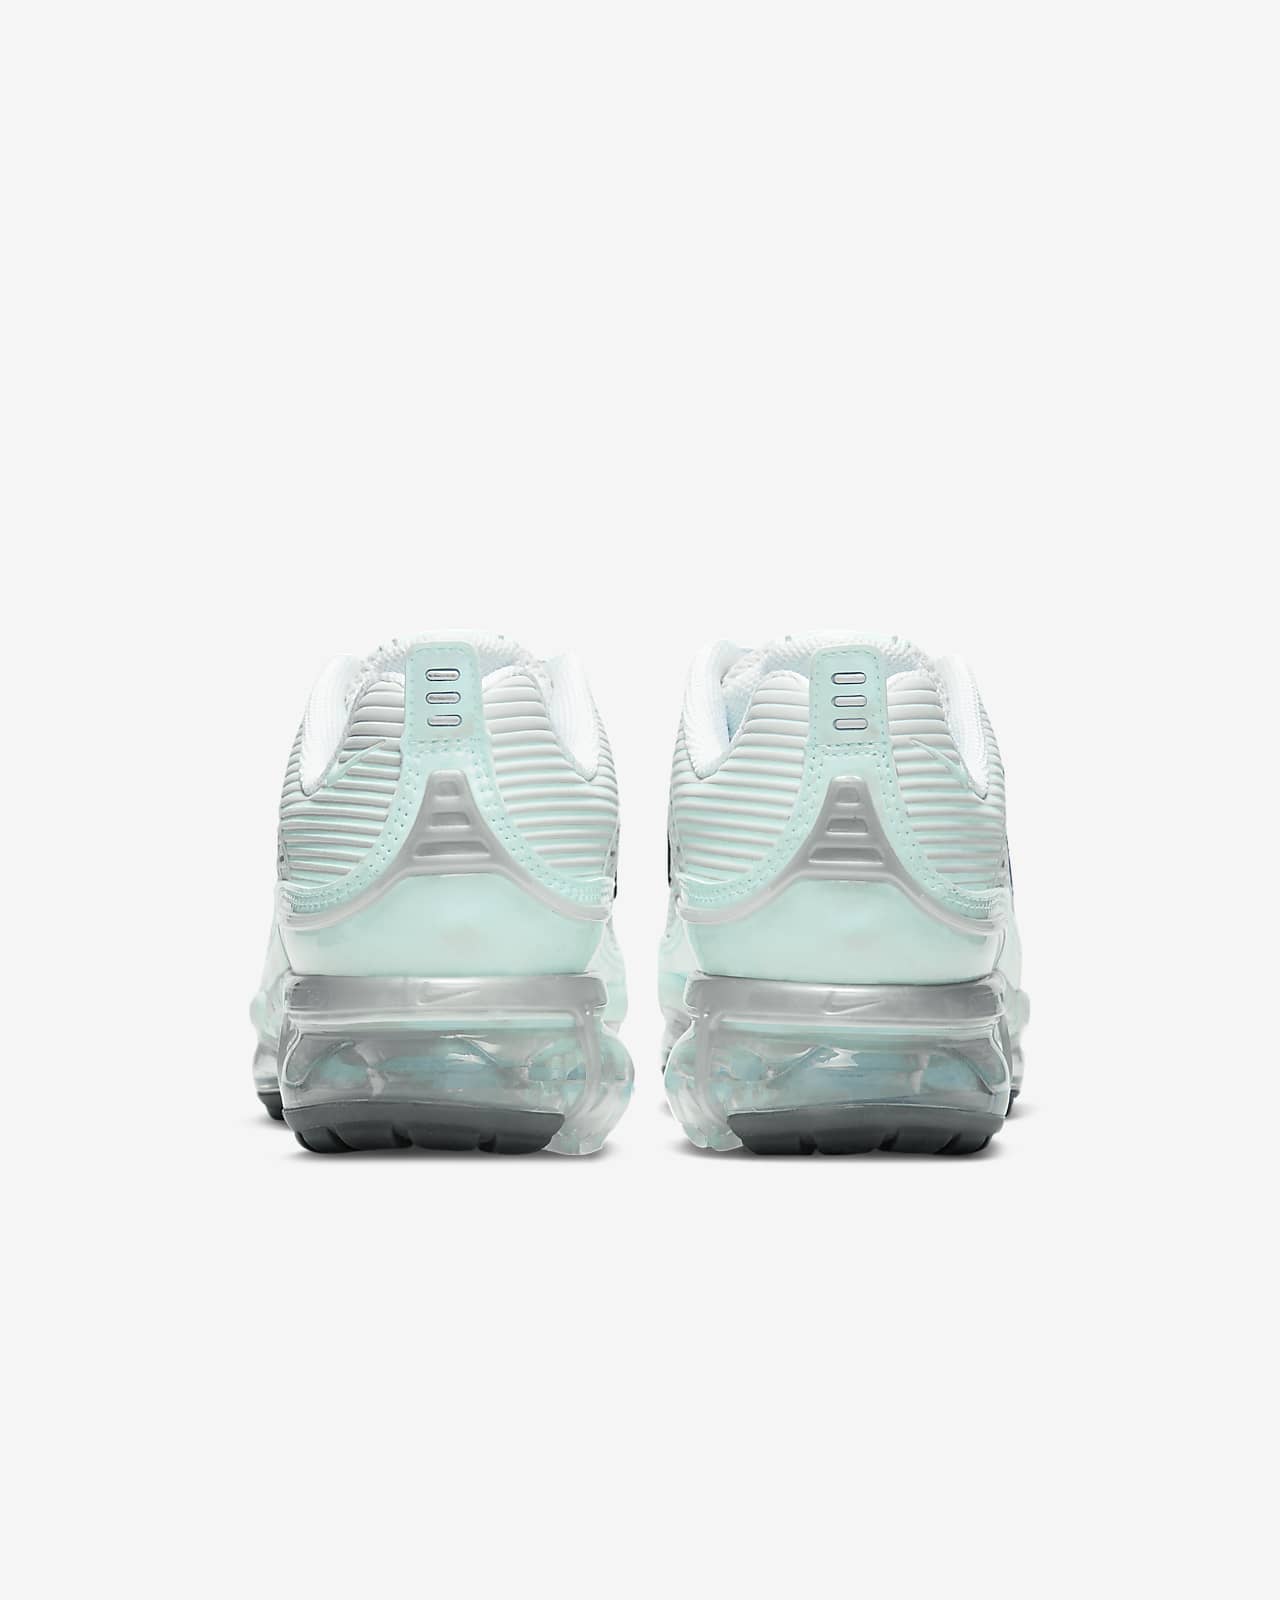 air vapormax 219 sneaker in teal tint & ember glow